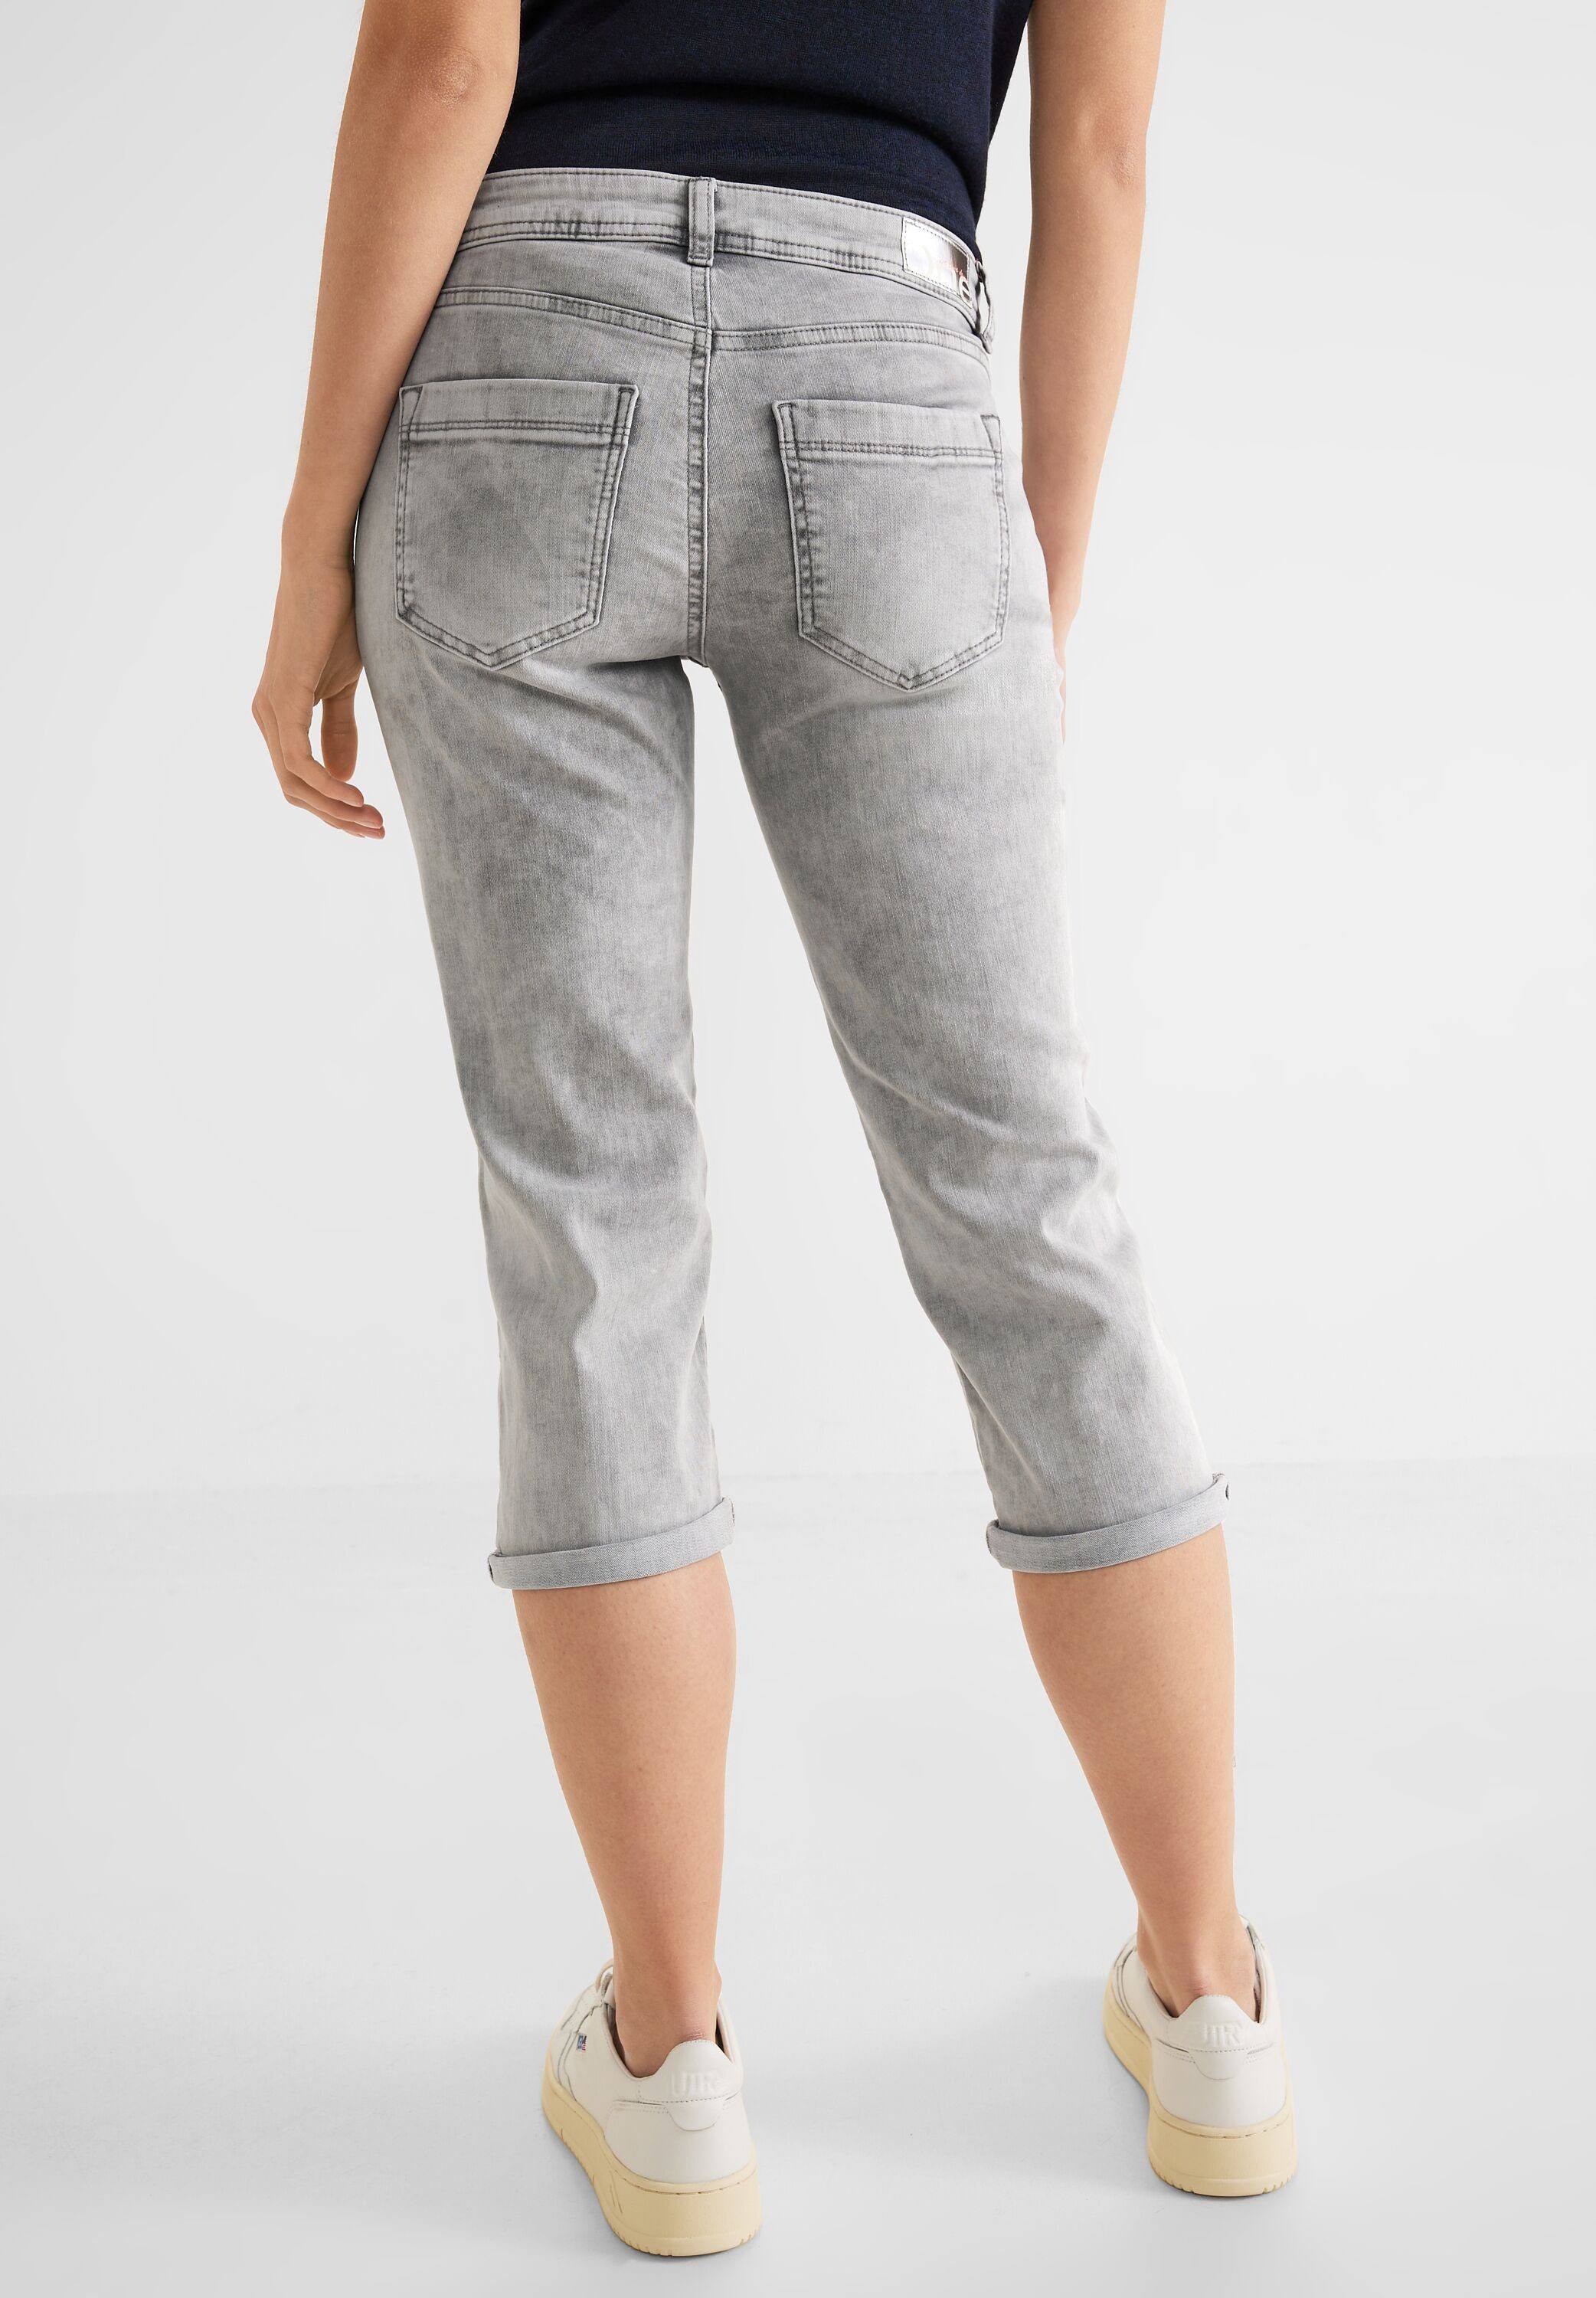 STREET ONE 3/4-Jeans 4-Pocket Style, Low Waist, Slim Legs